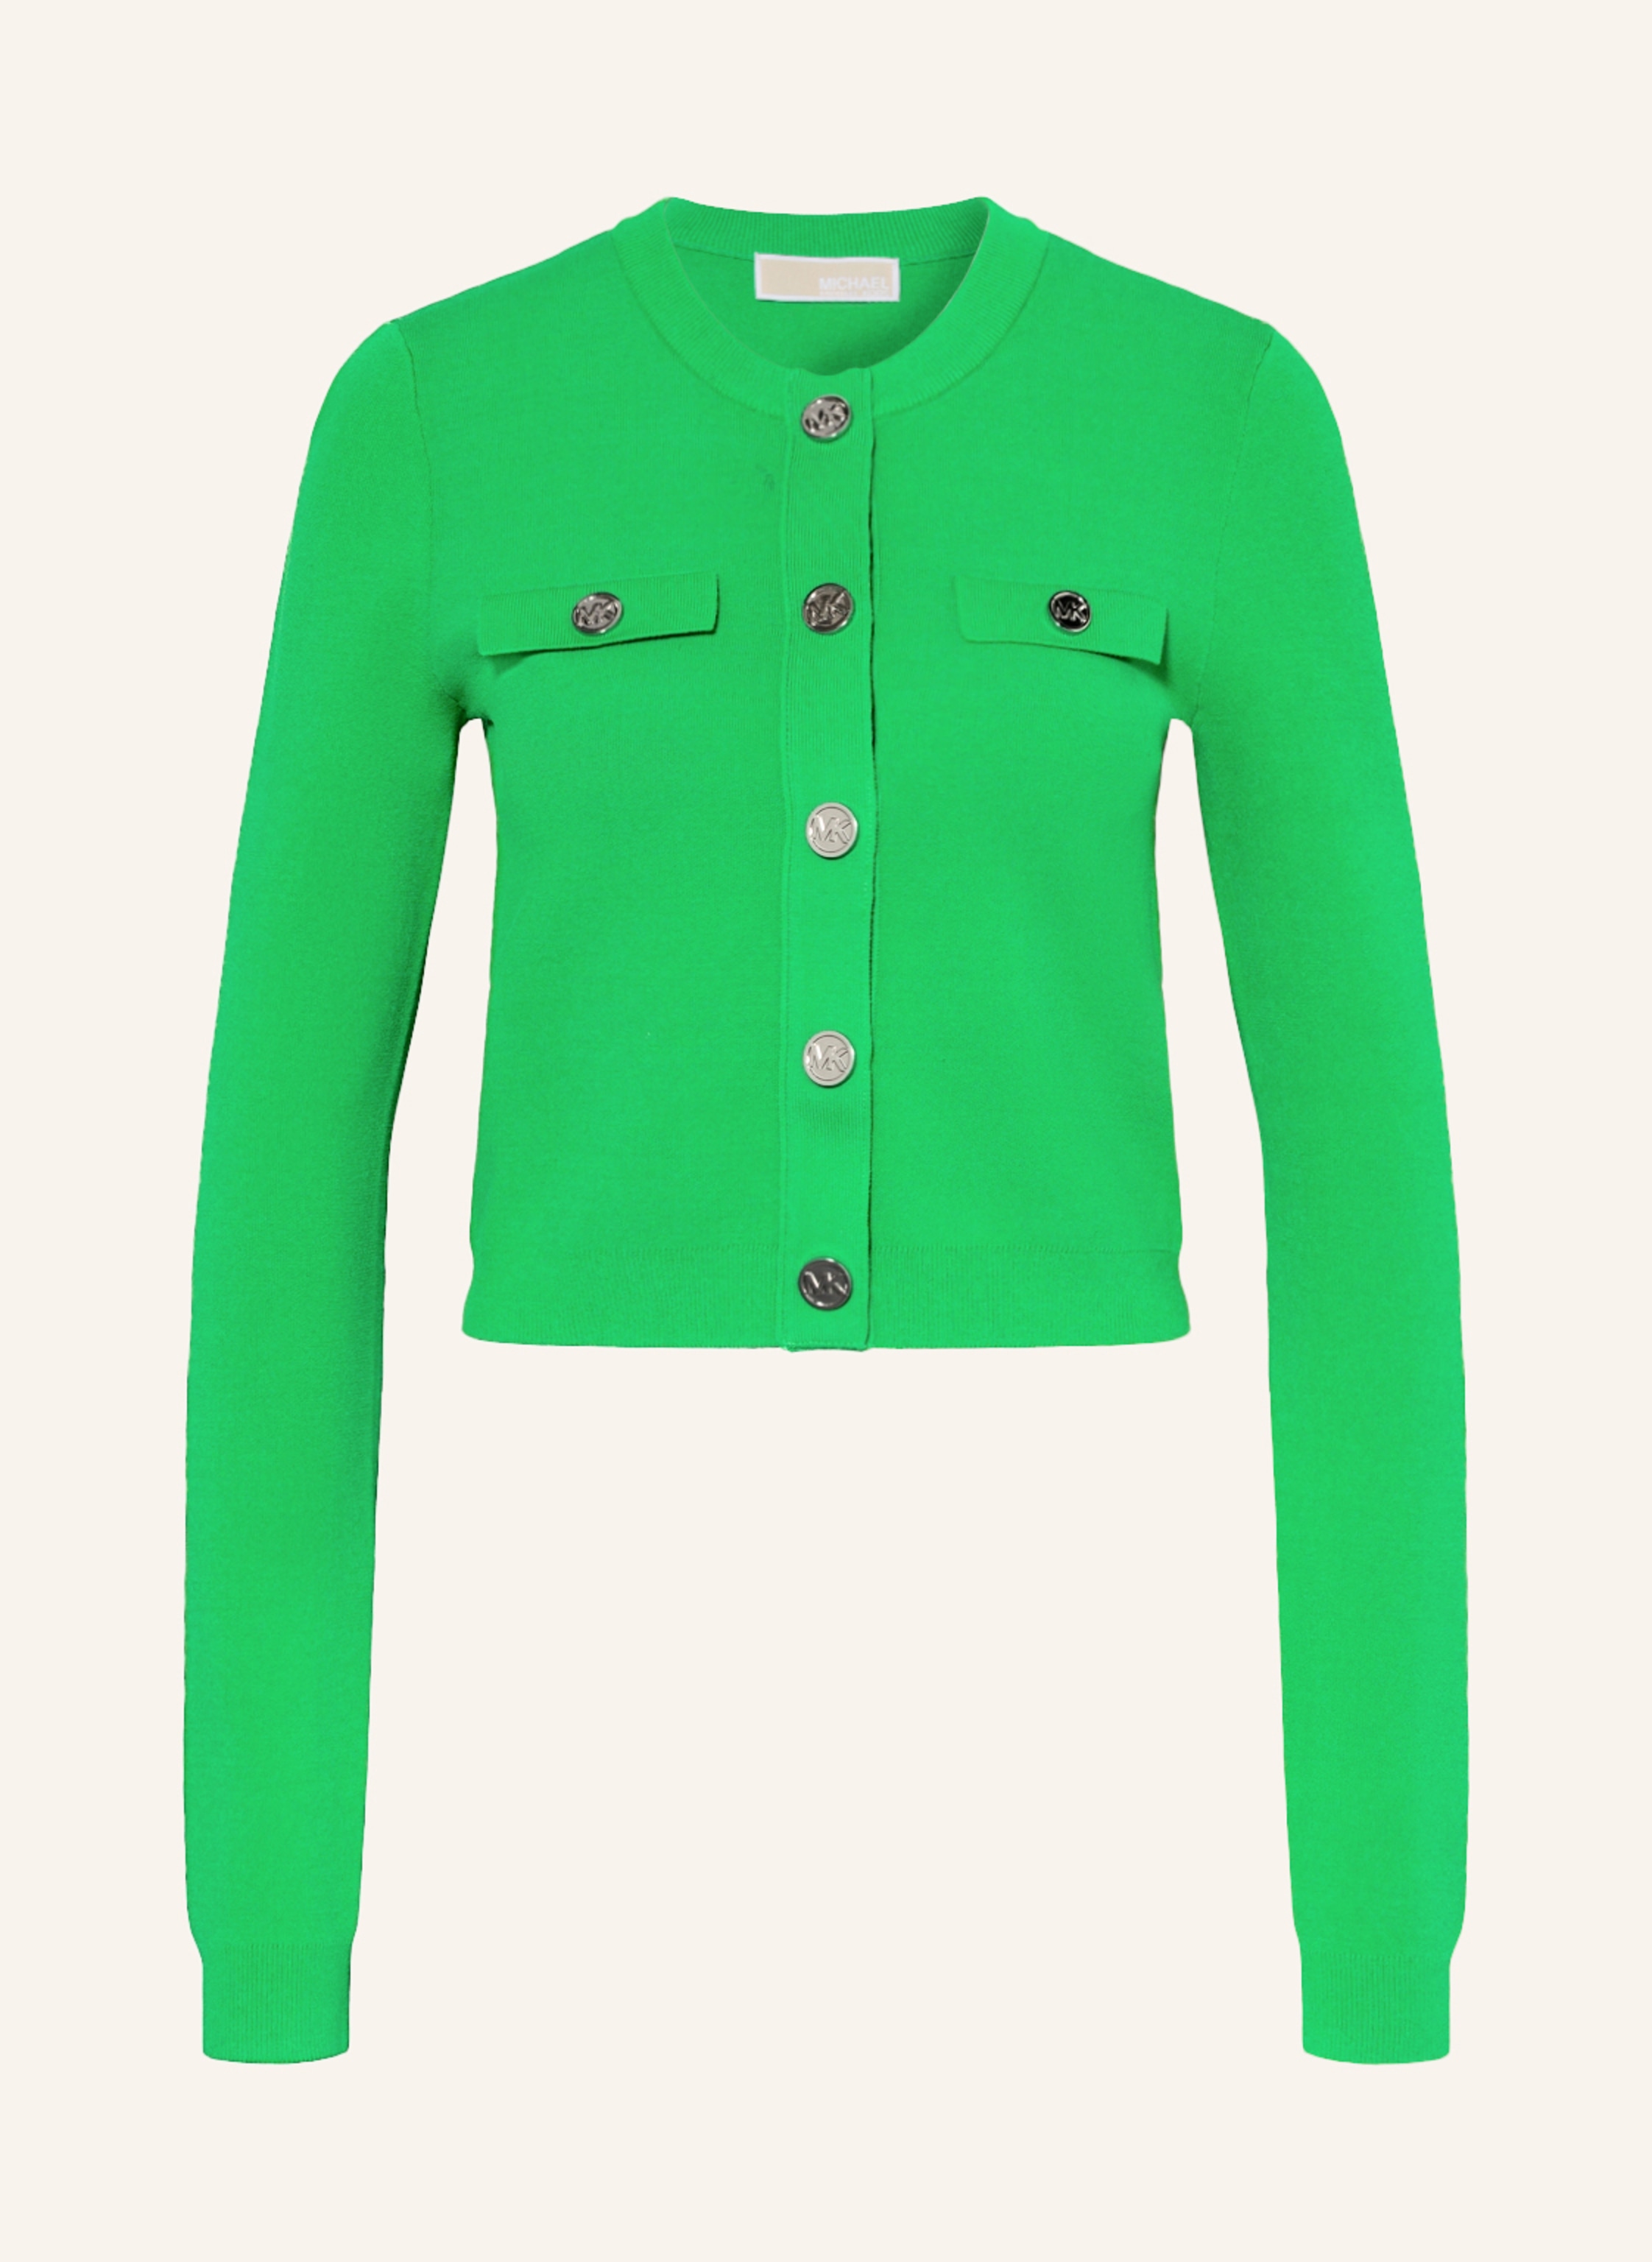 MICHAEL KORS Cropped cardigan in neon green | Breuninger